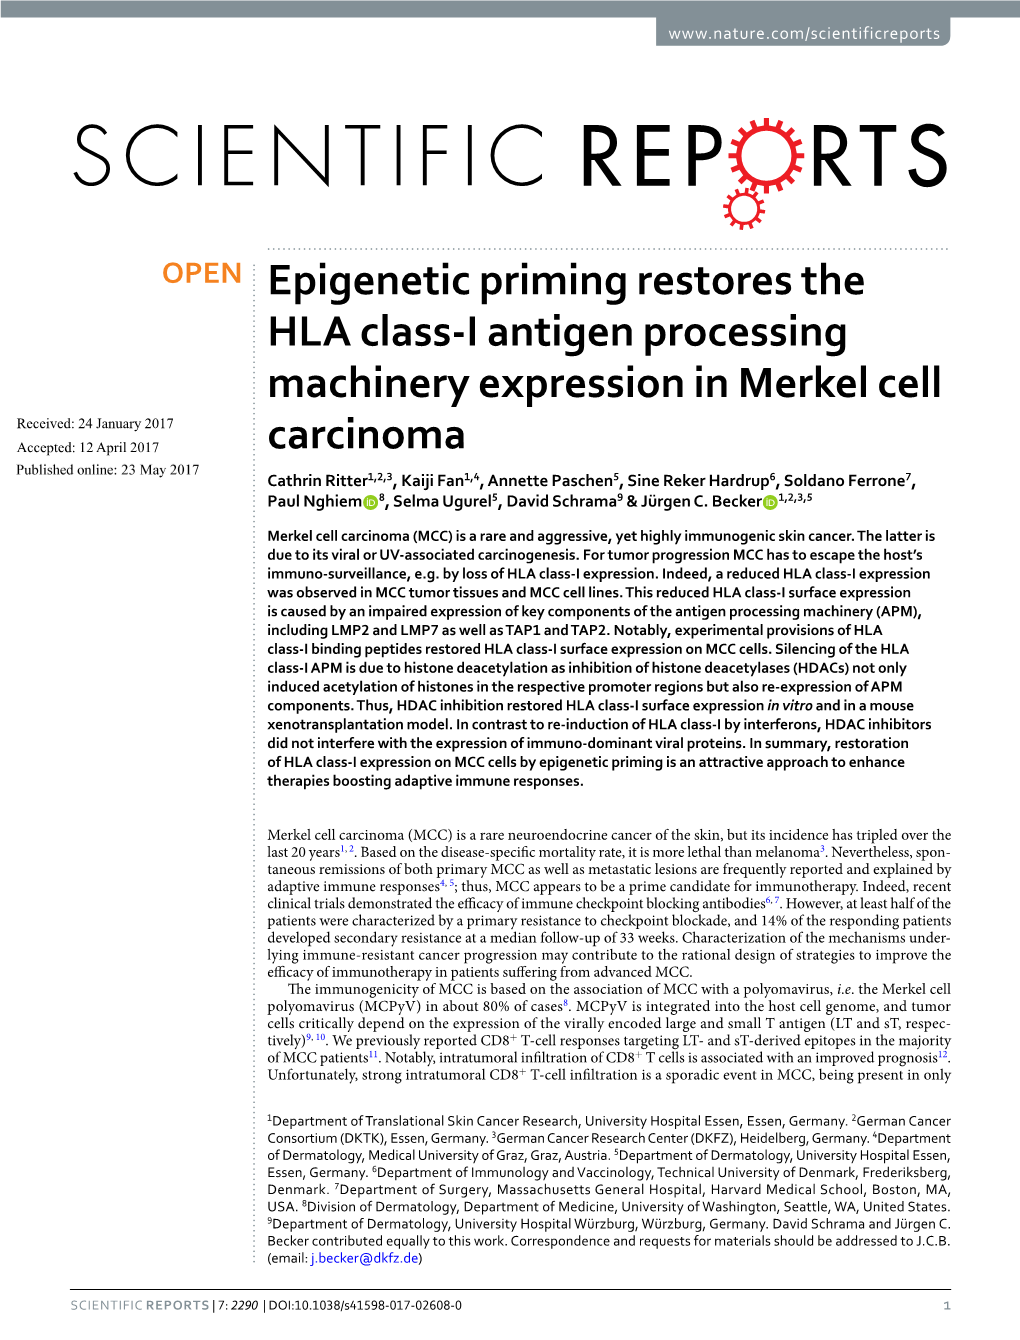 Epigenetic Priming Restores the HLA Class-I Antigen Processing